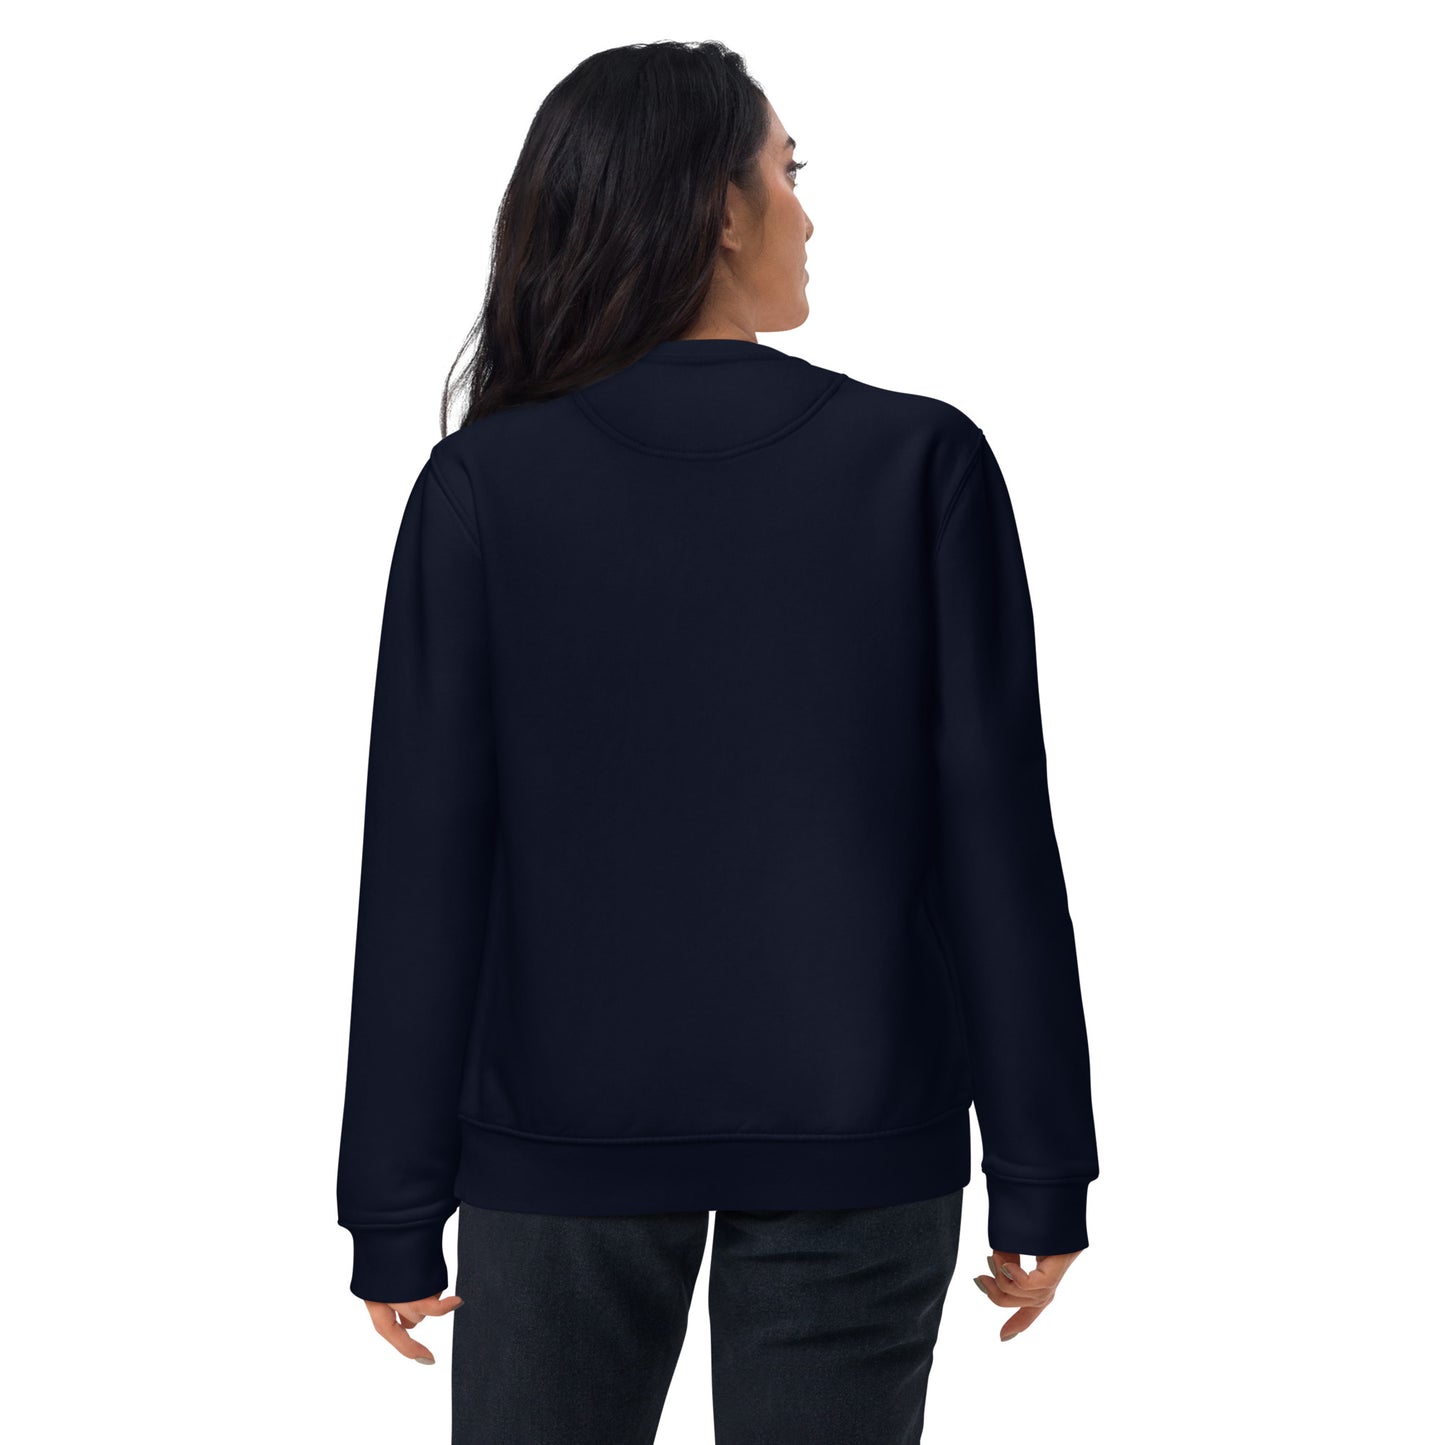 FE017.2 - Unisex Bio-Pullover - Sweater - Sweatshirt - Woman Life Freedom 1 - baby blue/red logo